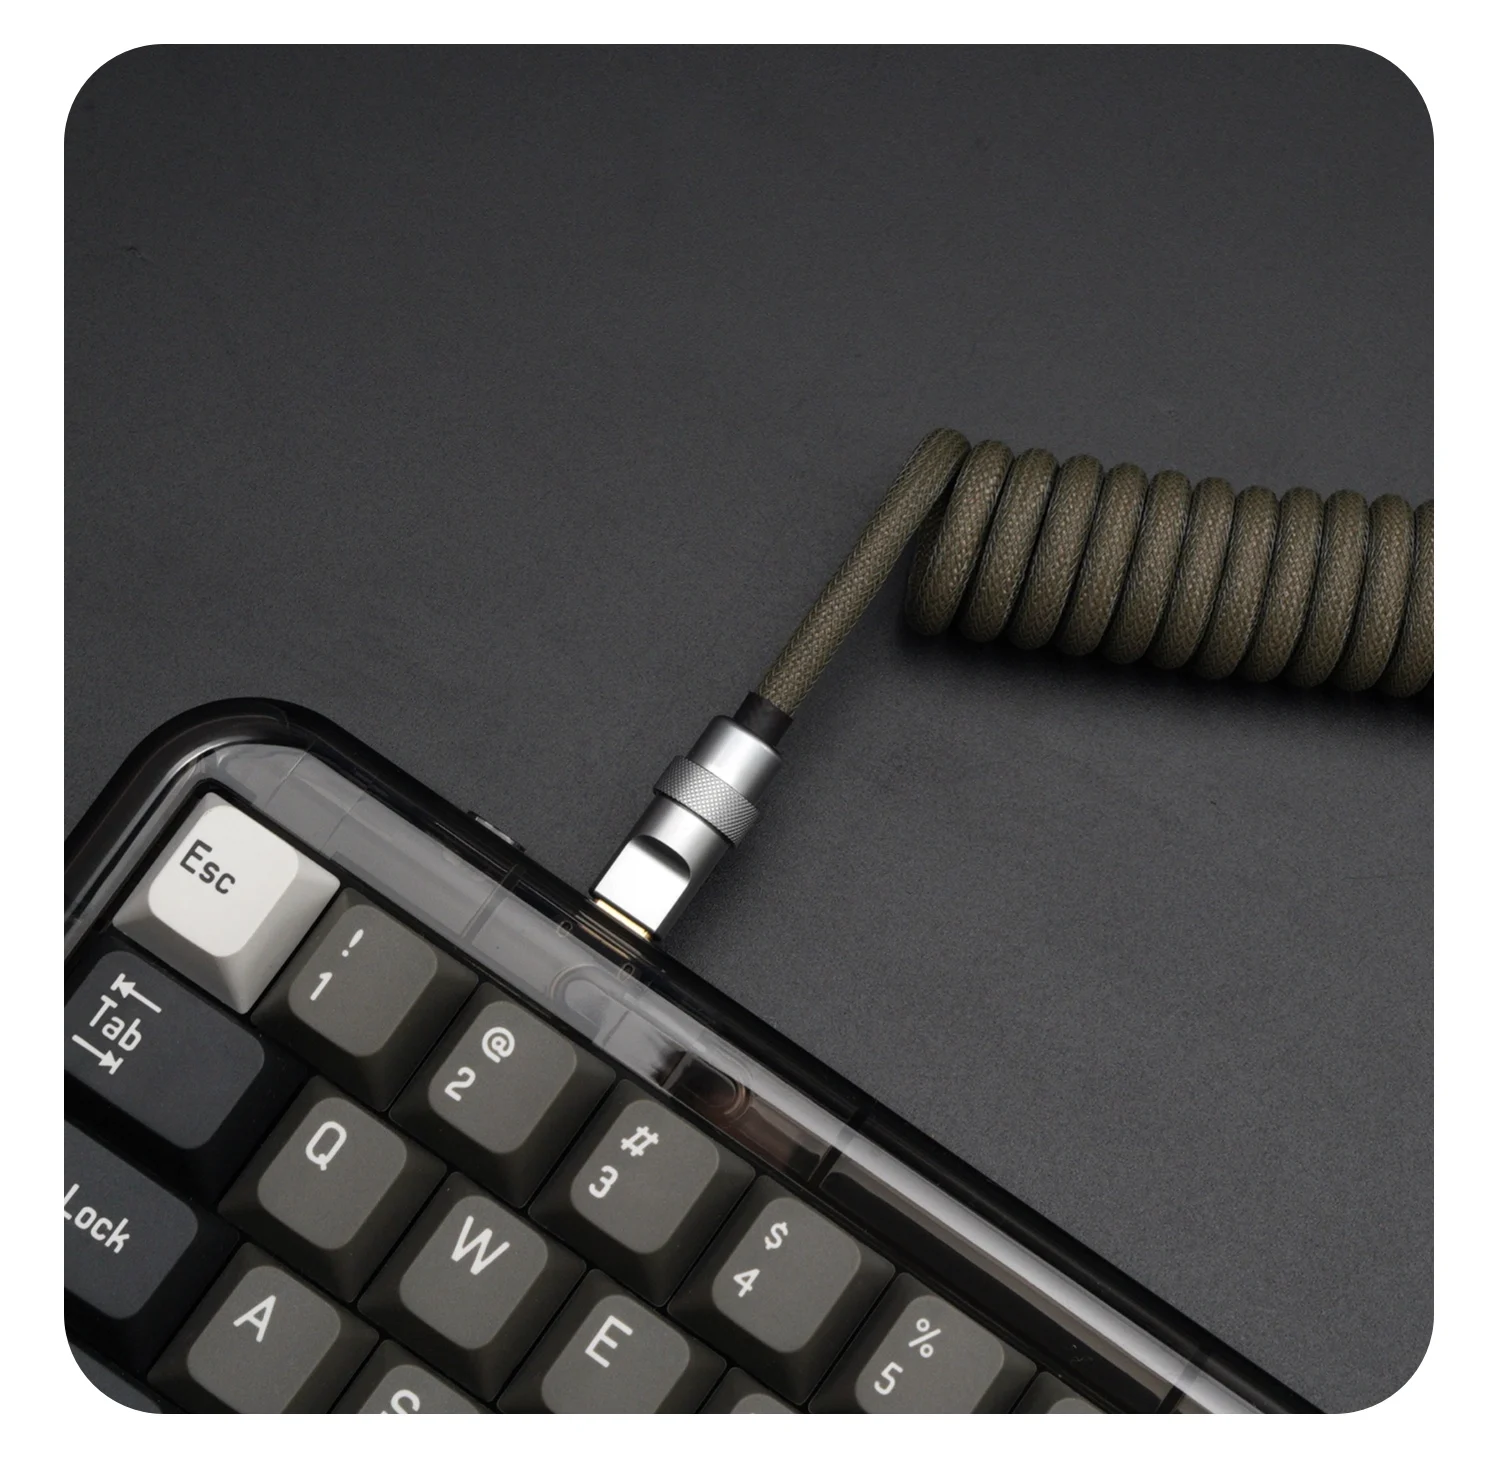 GeekCable tastatura cablu de date MelGeek Mojo68 stralucire retro gri negru din spate Imagine 3